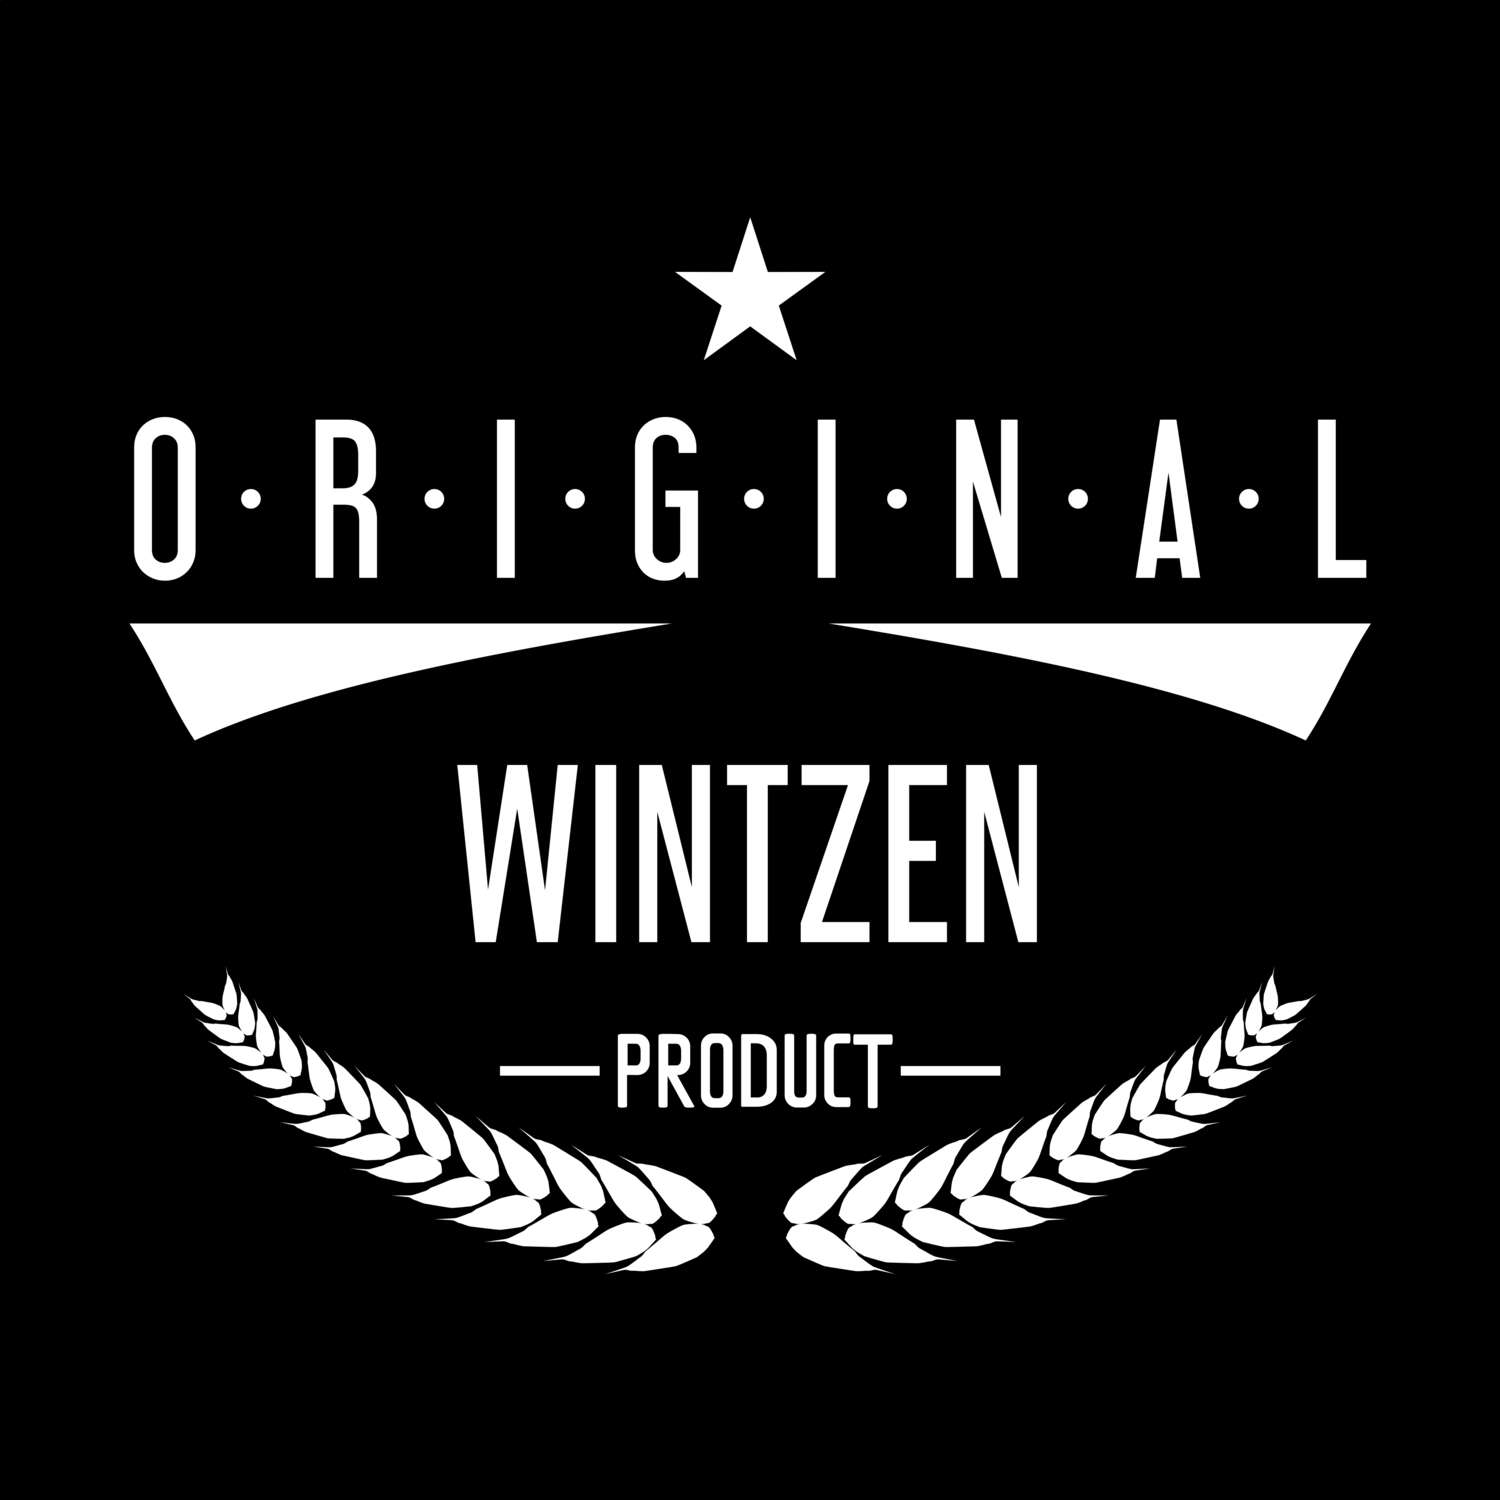 Wintzen T-Shirt »Original Product«